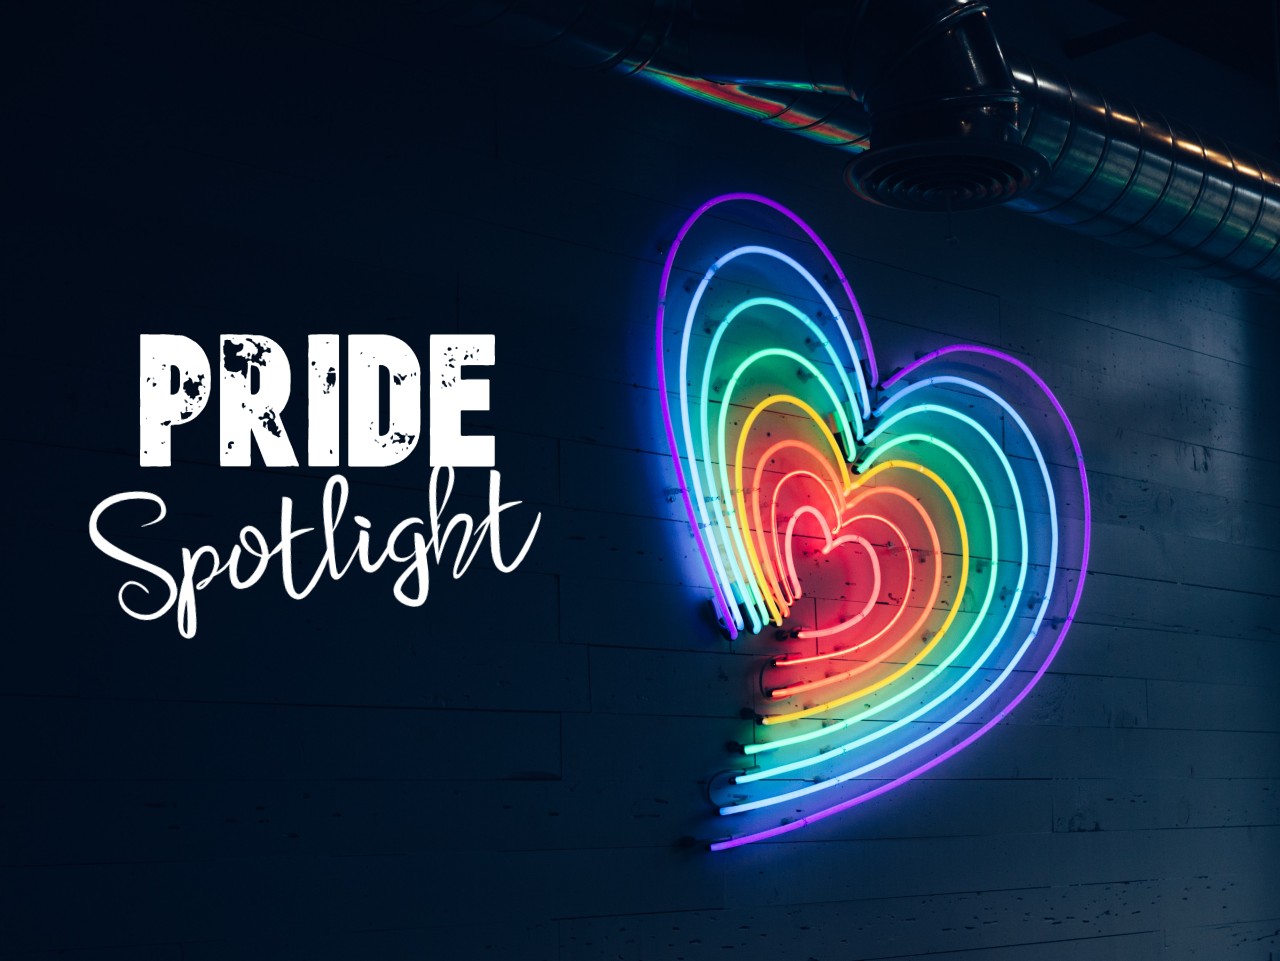 Pride 2021 Spotlight